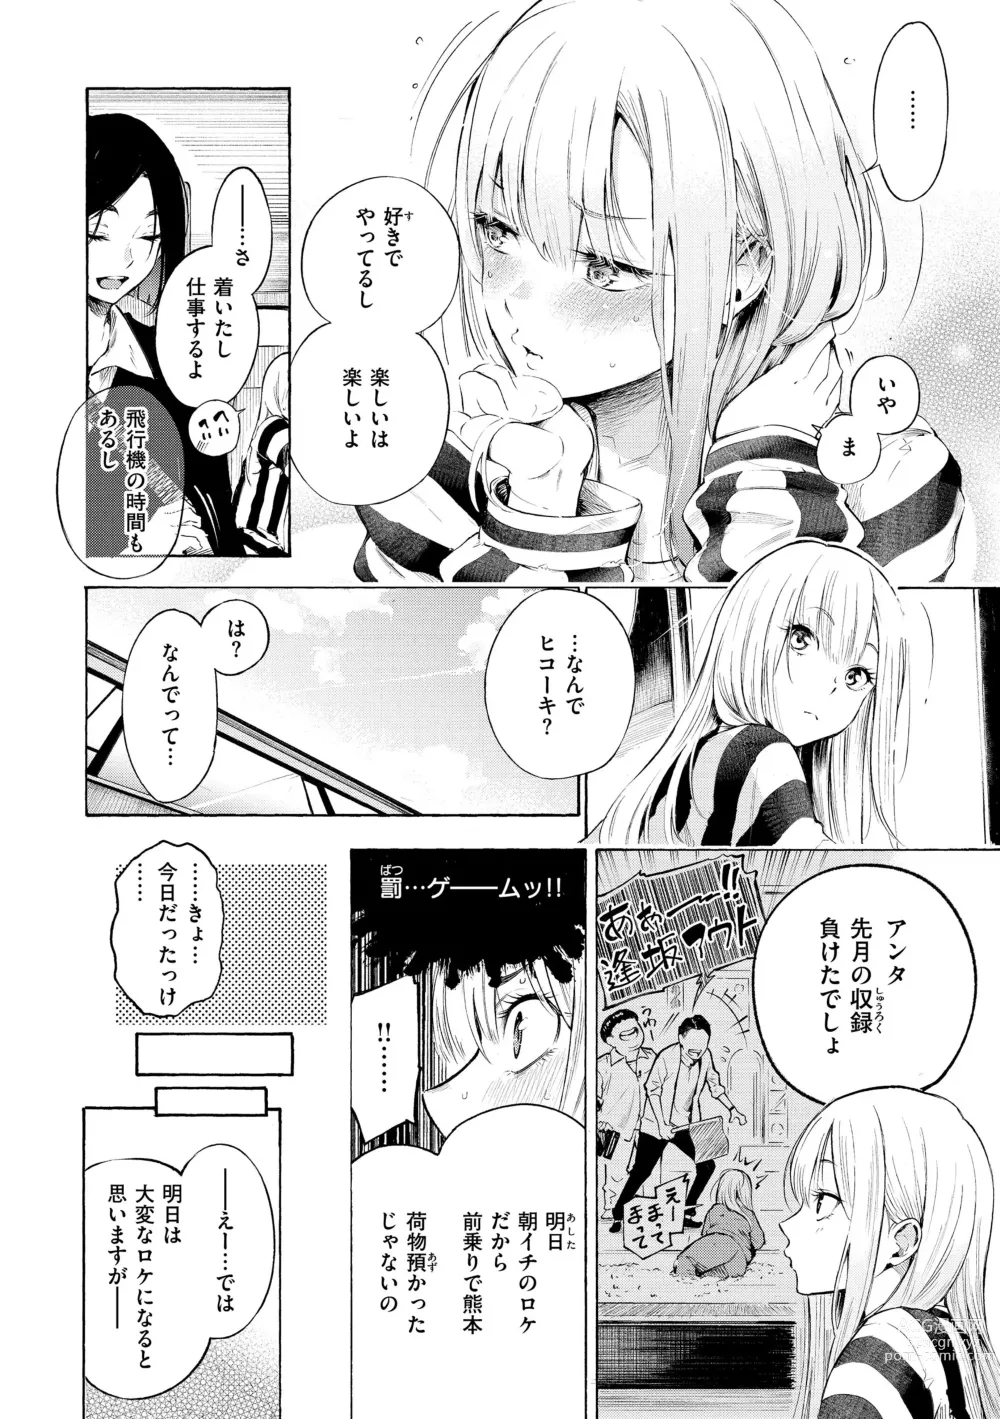 Page 8 of manga Frustration Girls - Mura Mura Girls ready for you!!